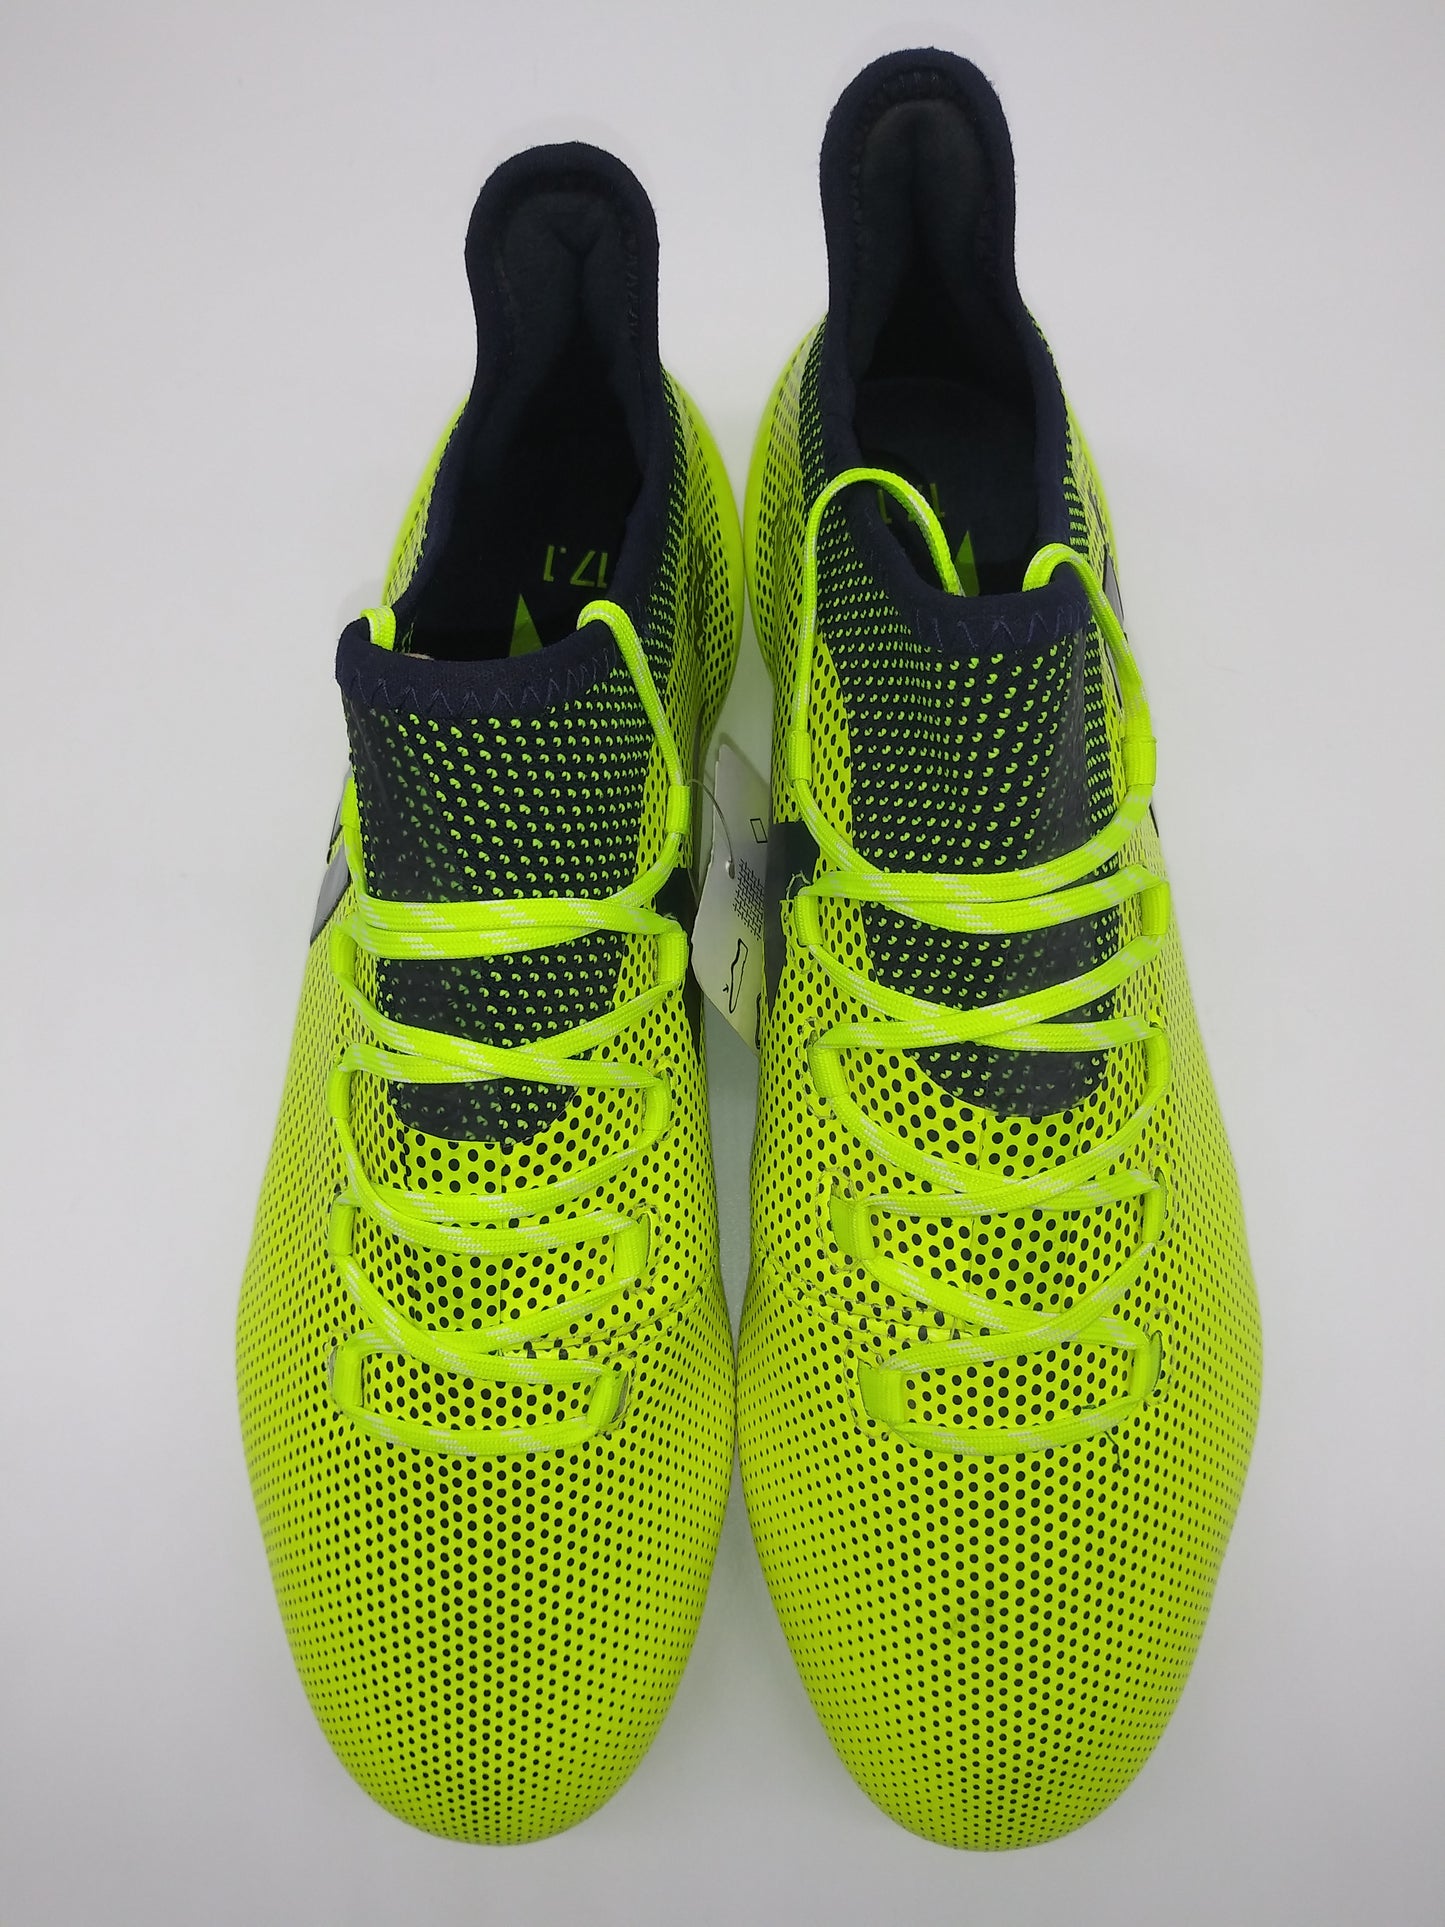 Adidas X 17.1 SG Yellow Black